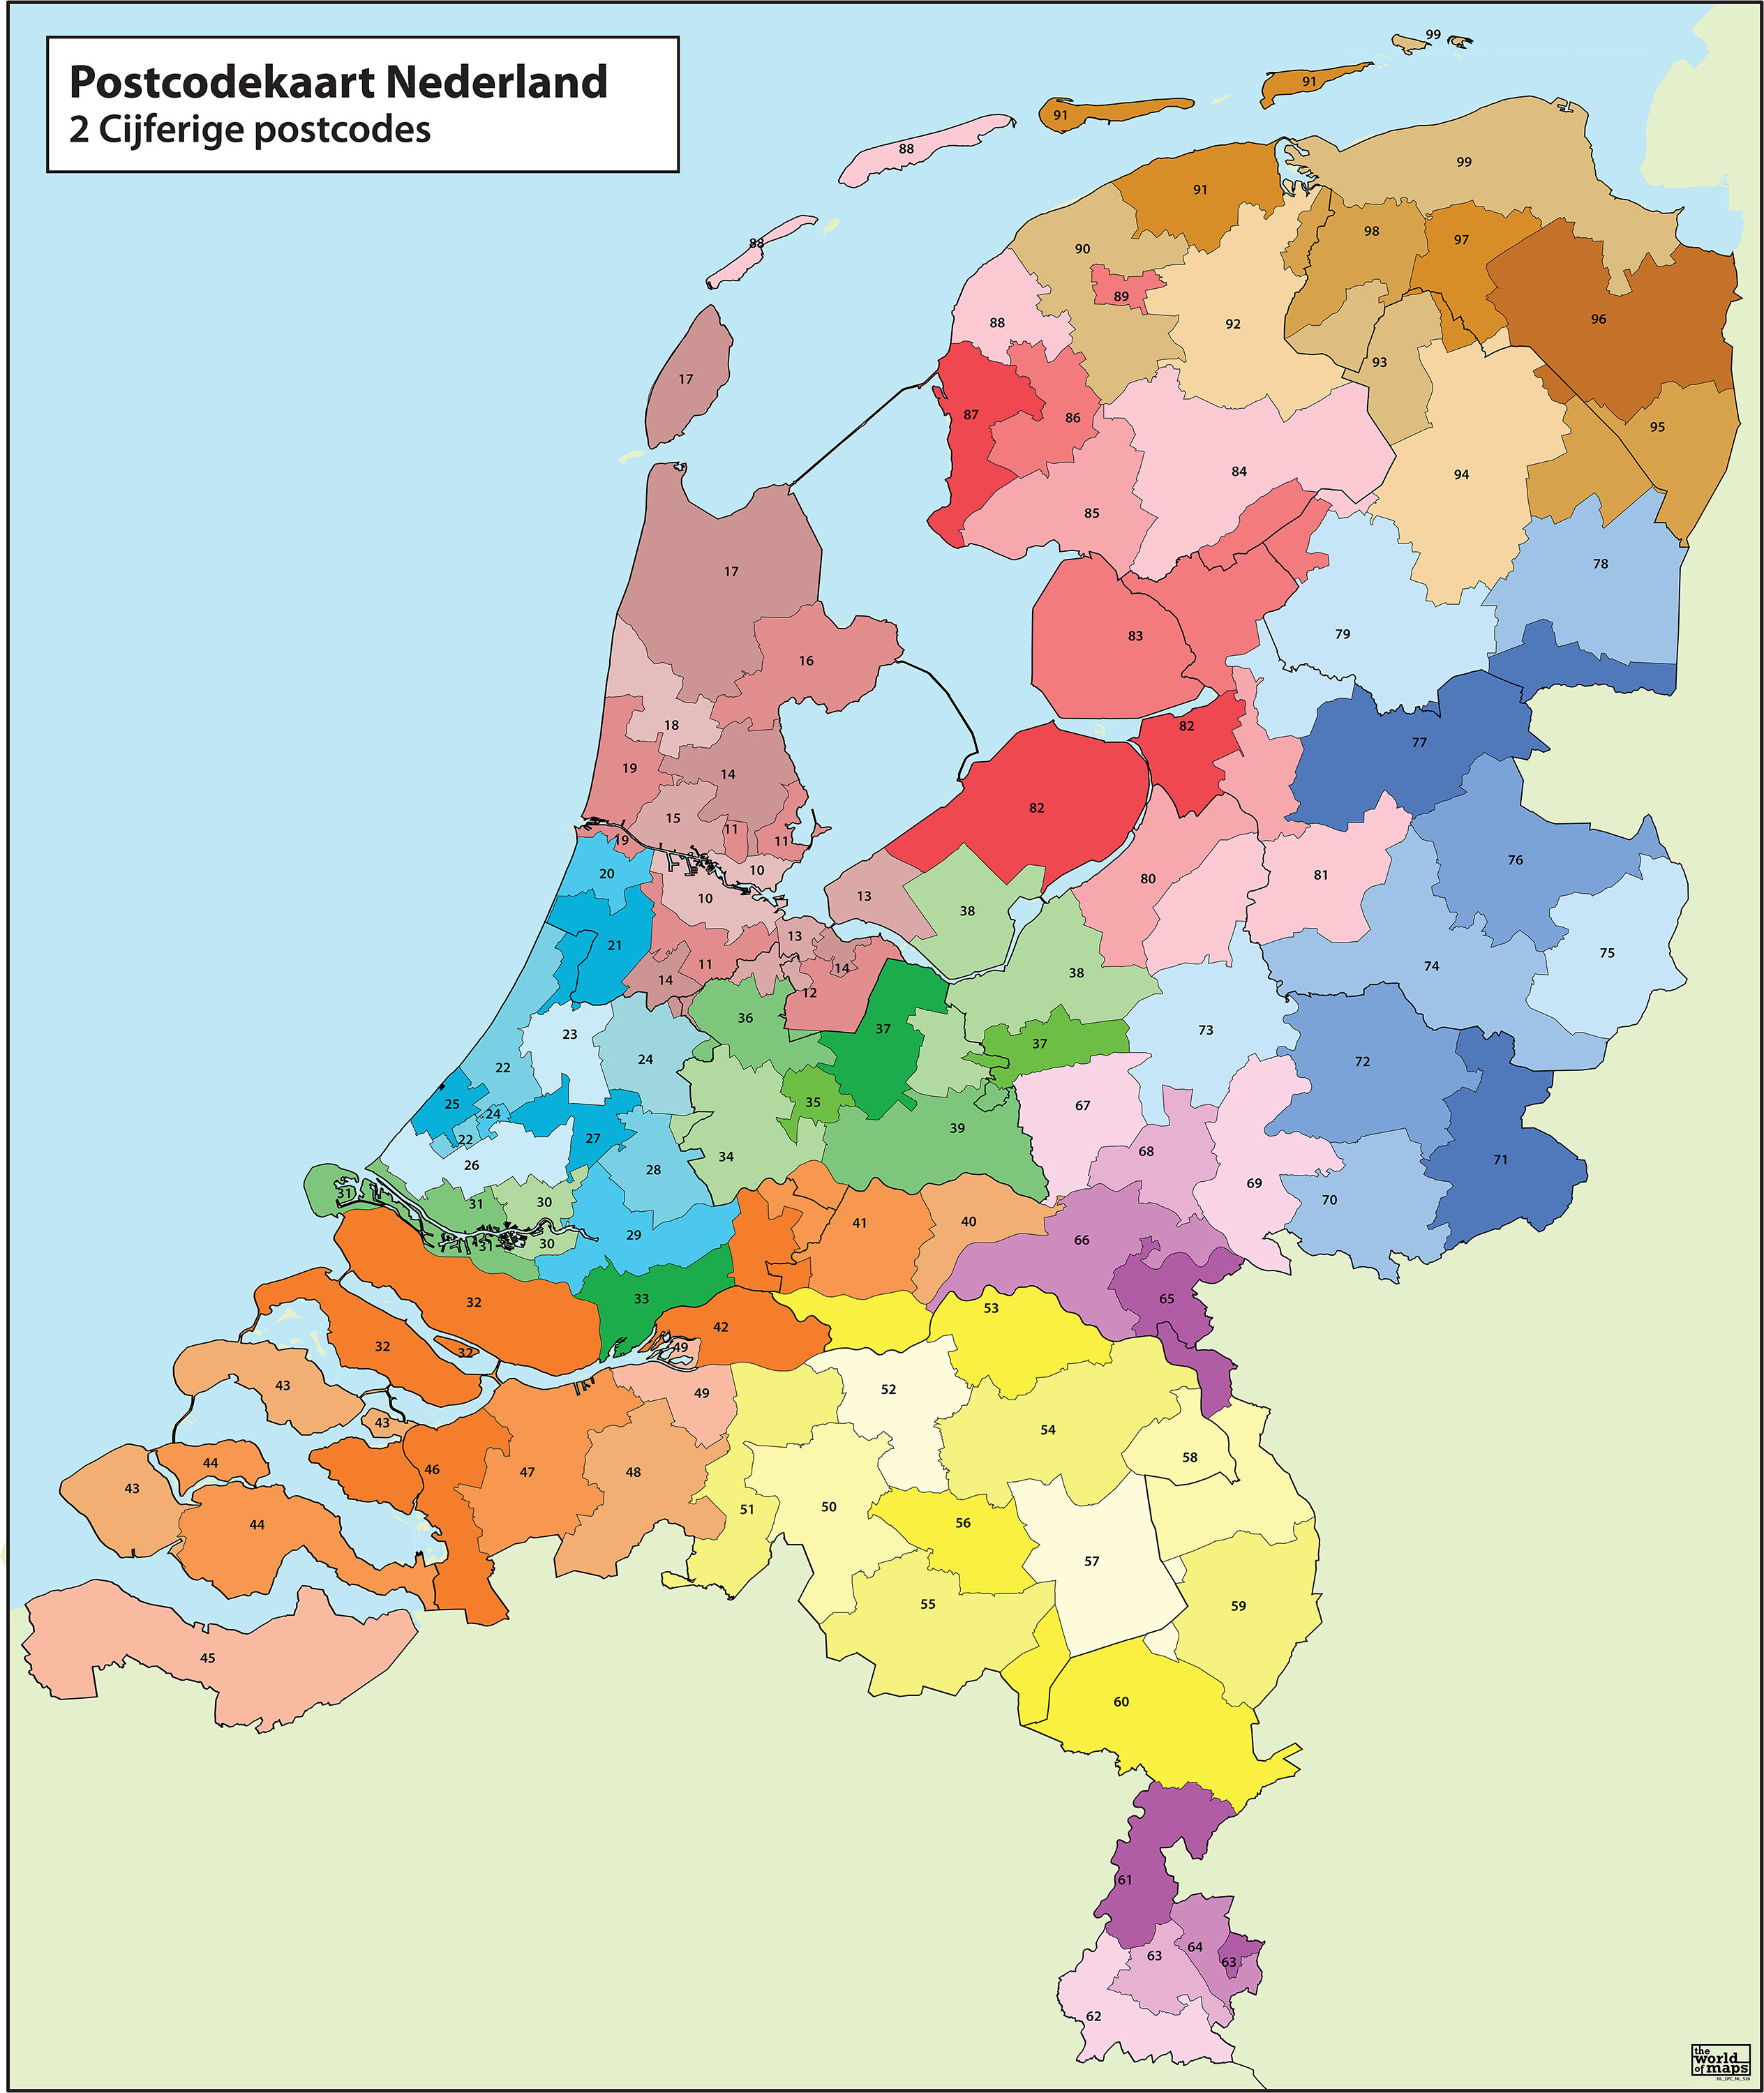 Digital Postcode Map The Netherlands 526 The World Of